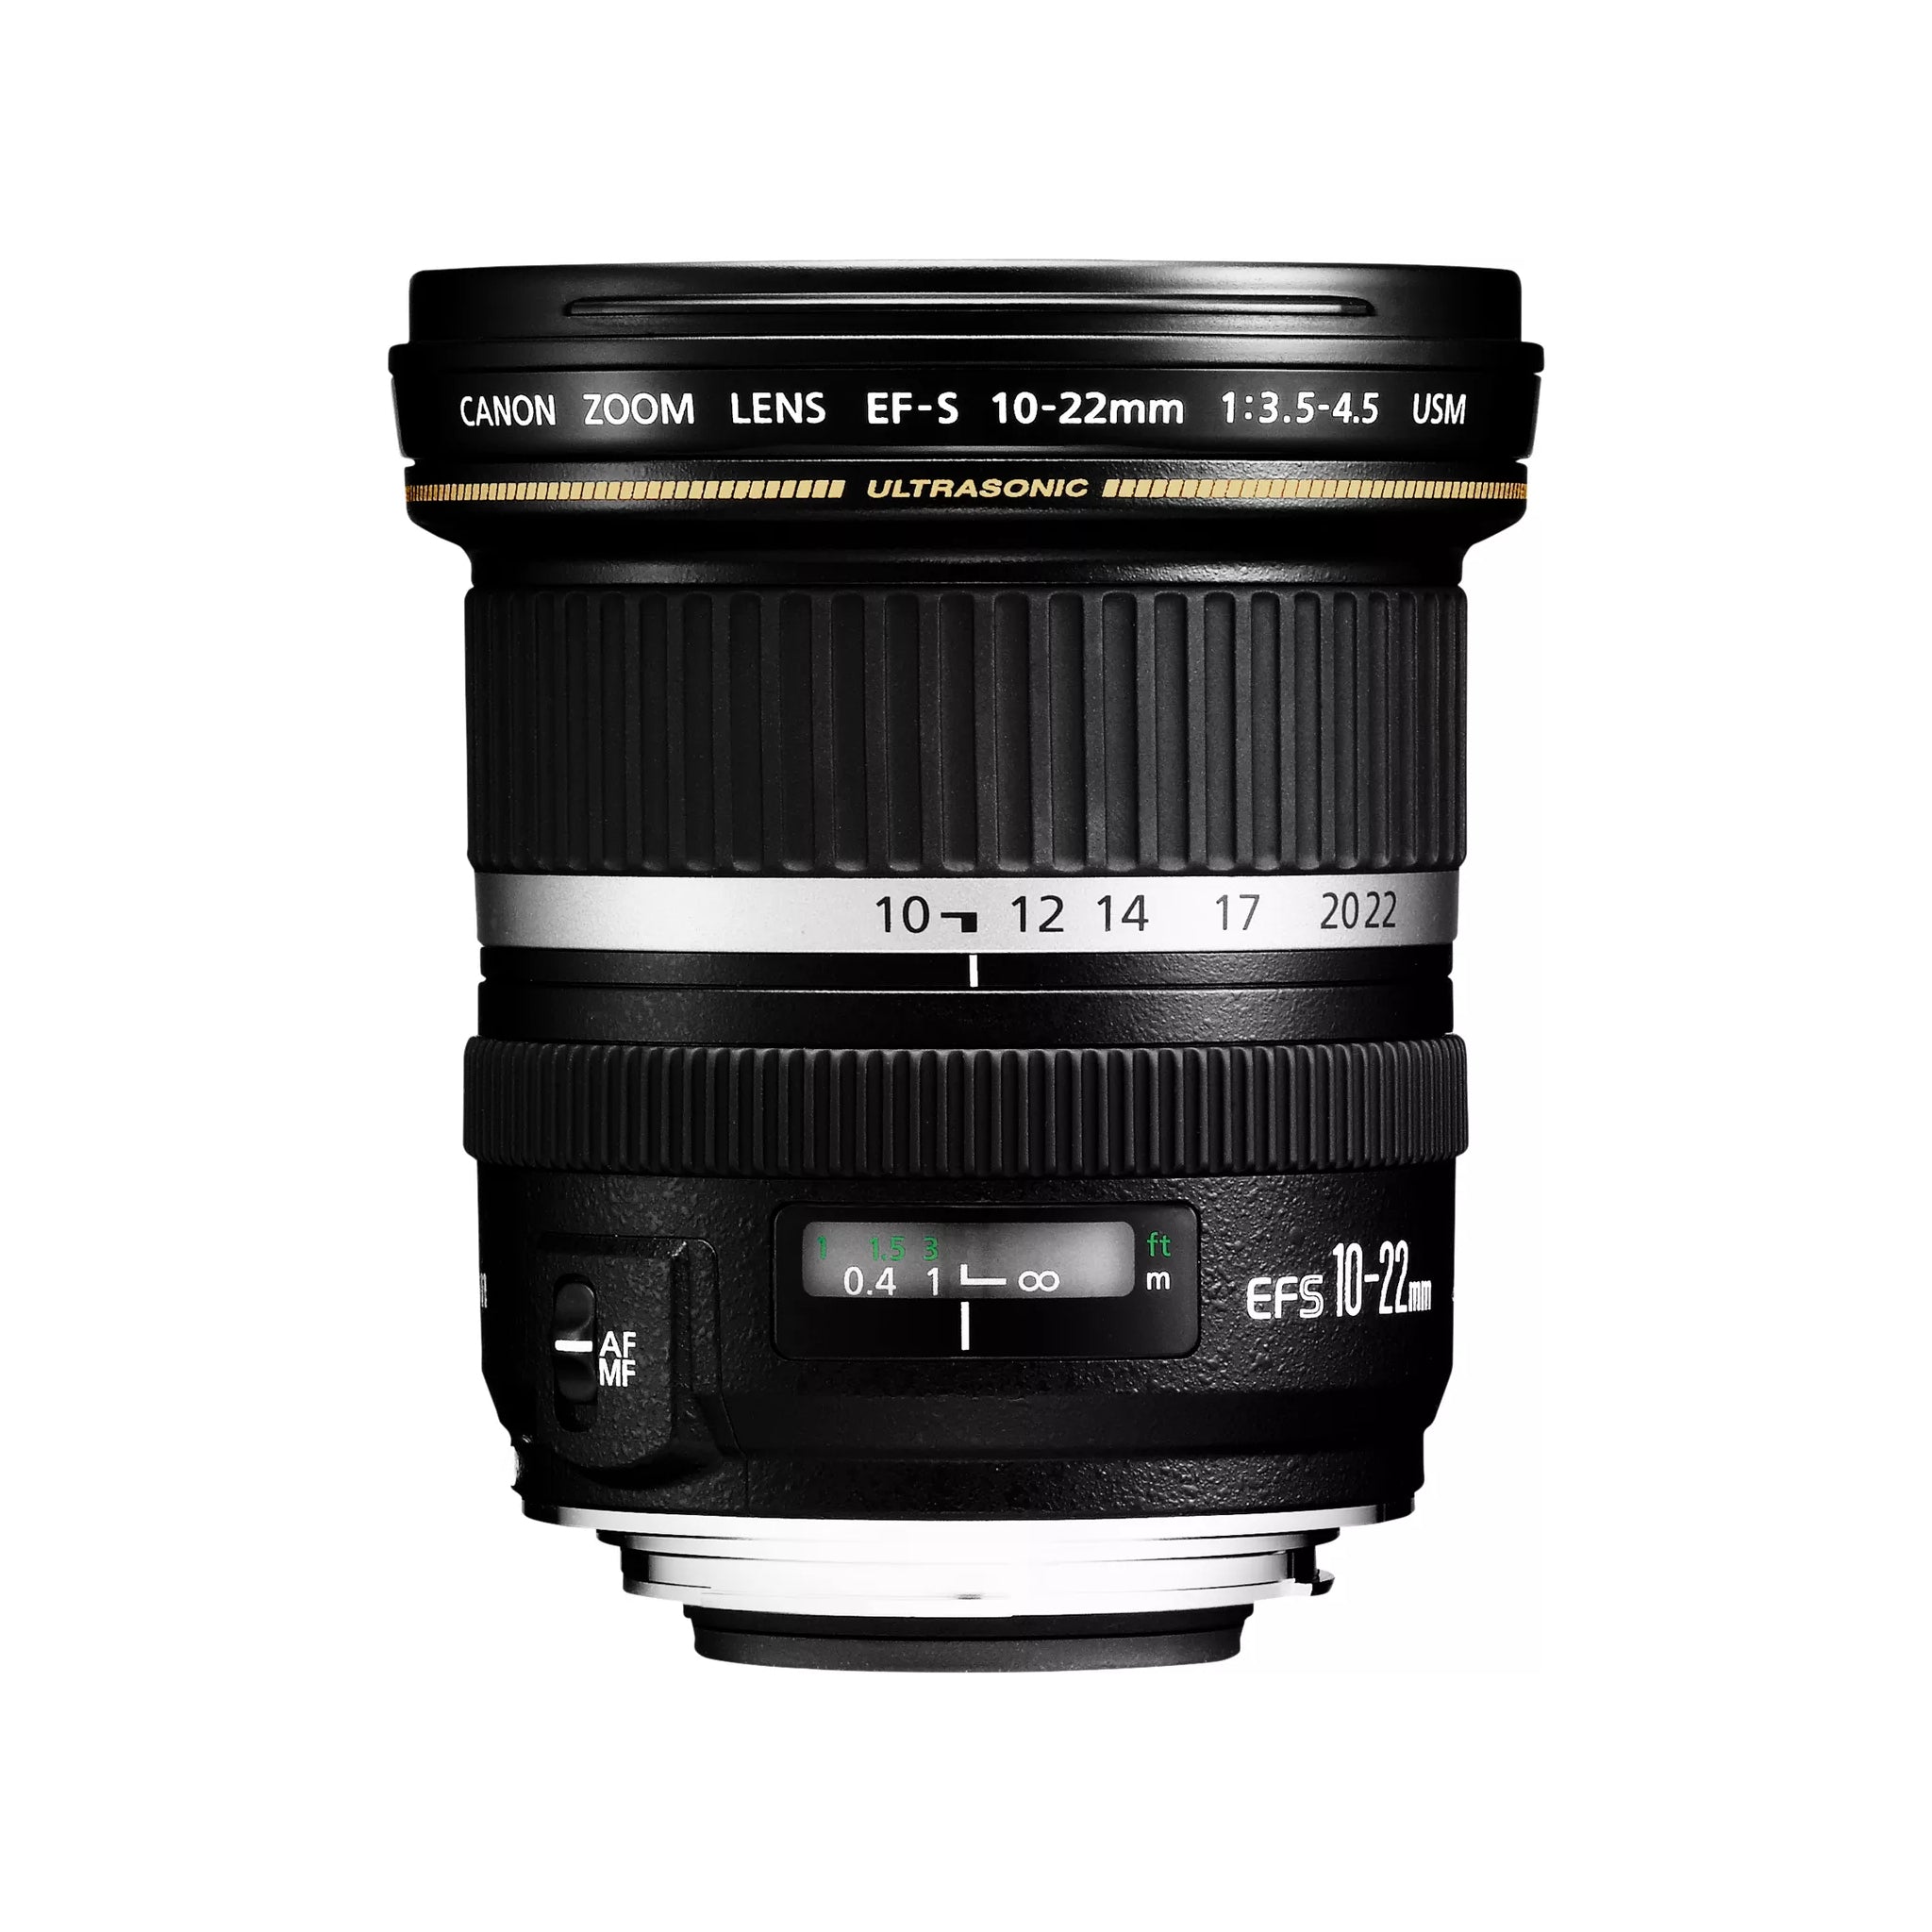 Canon EF-S 10-22mm f/3.5-4.5 IS USM lens